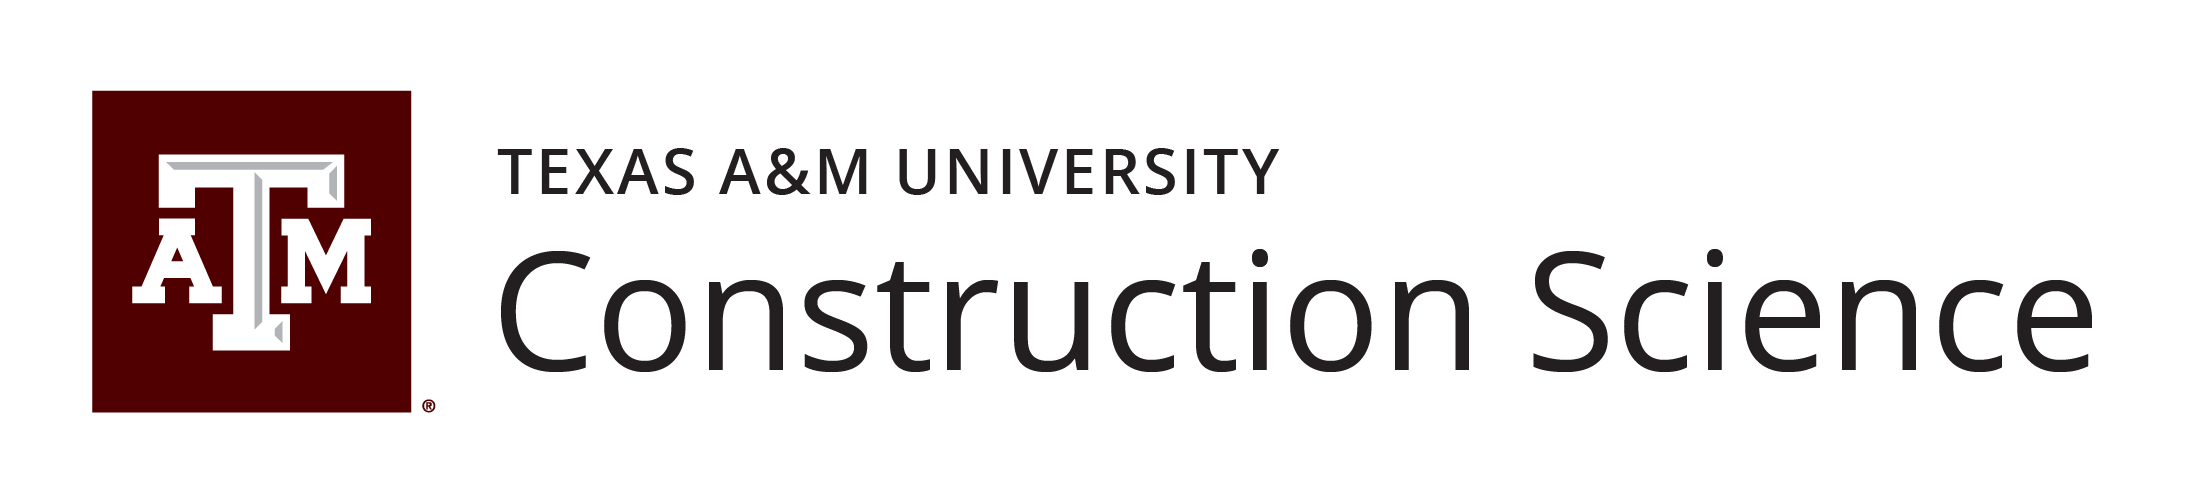 Department of Construction Science Logos - Texas A&M University School ...